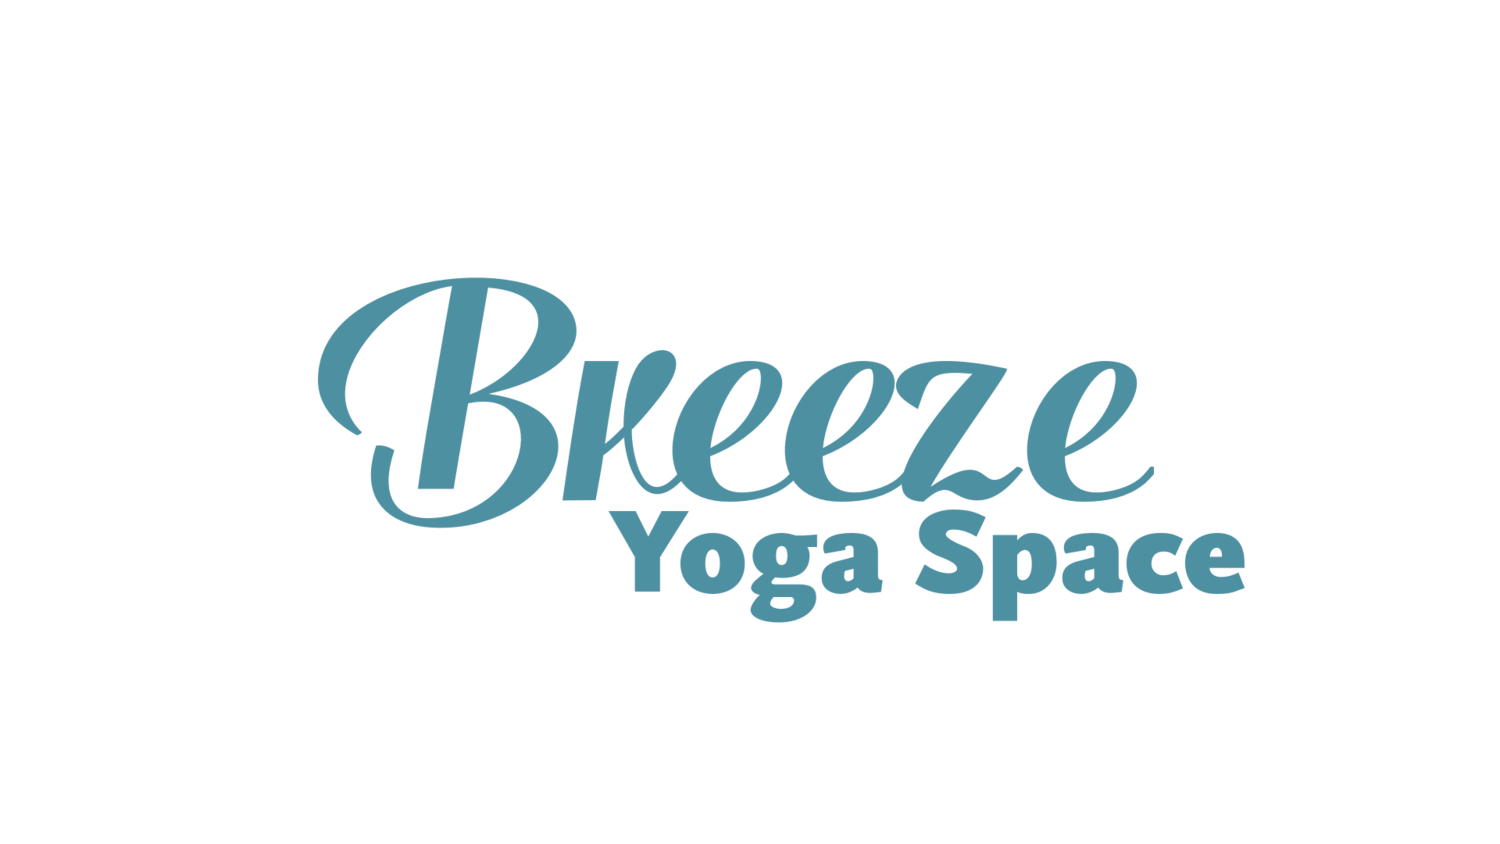 Breeze Yoga Space